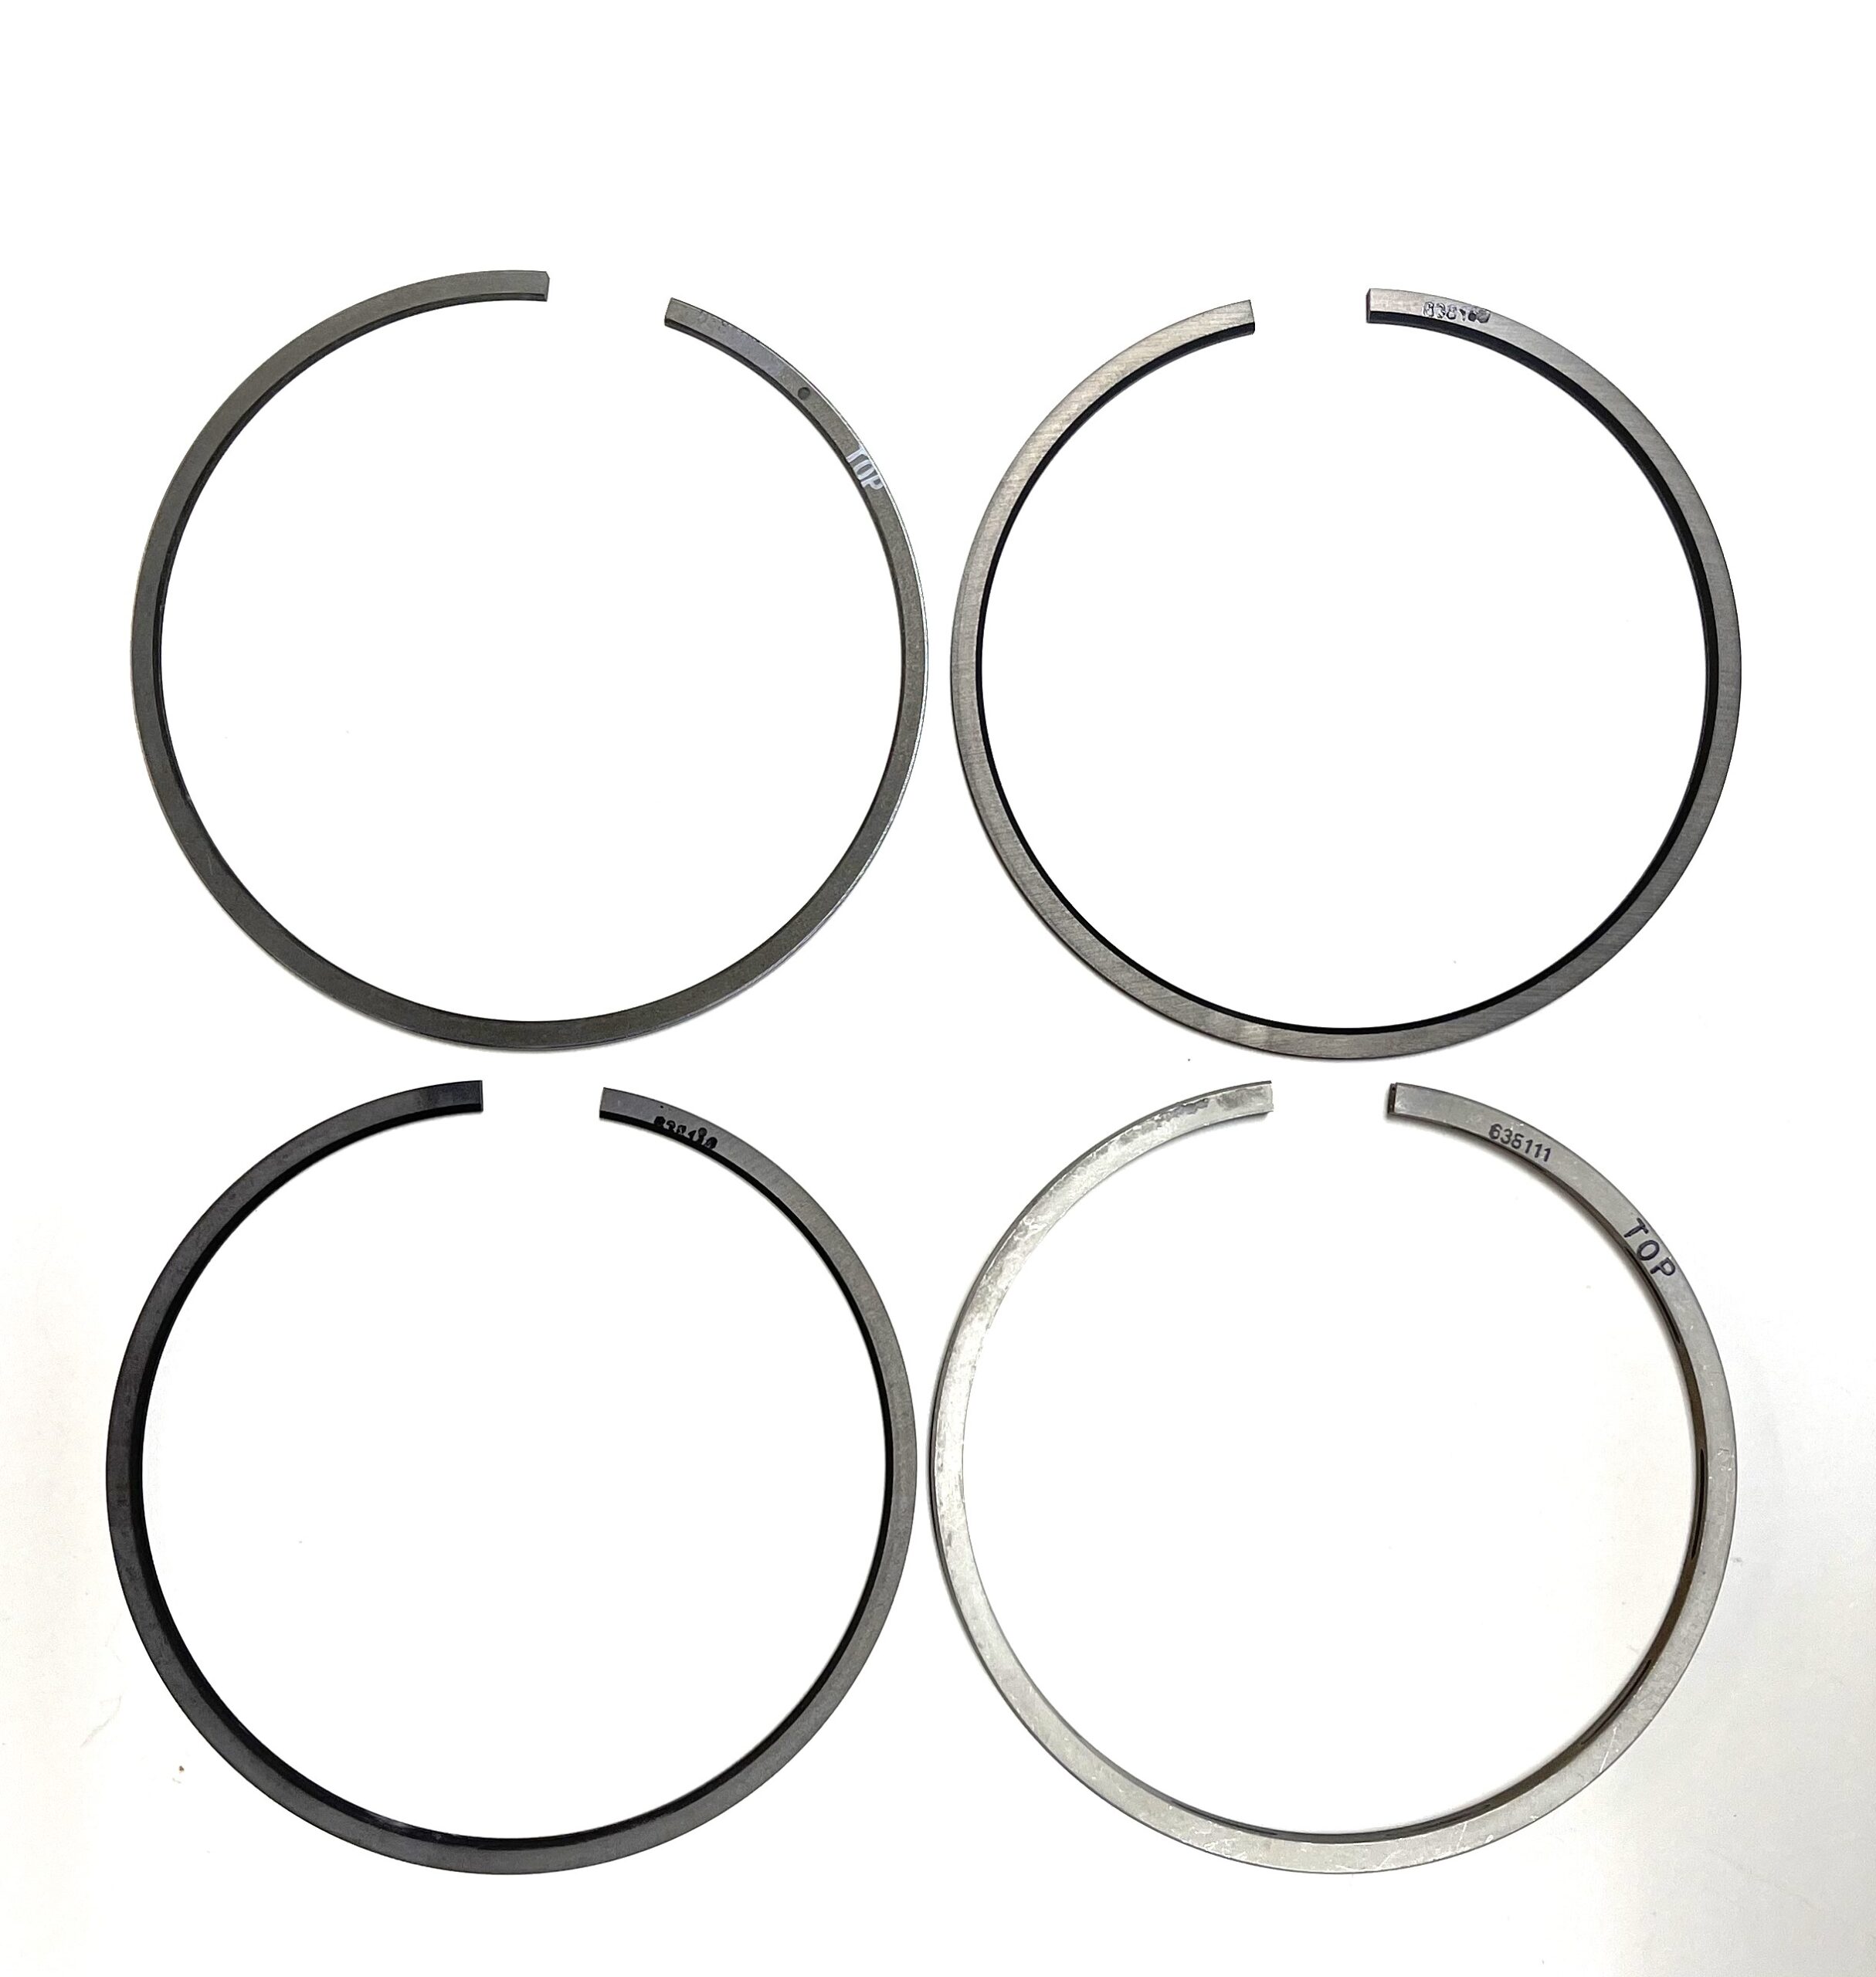 00402-21910 Genuine Hyundai Satin chrome finish, 3 small key rings